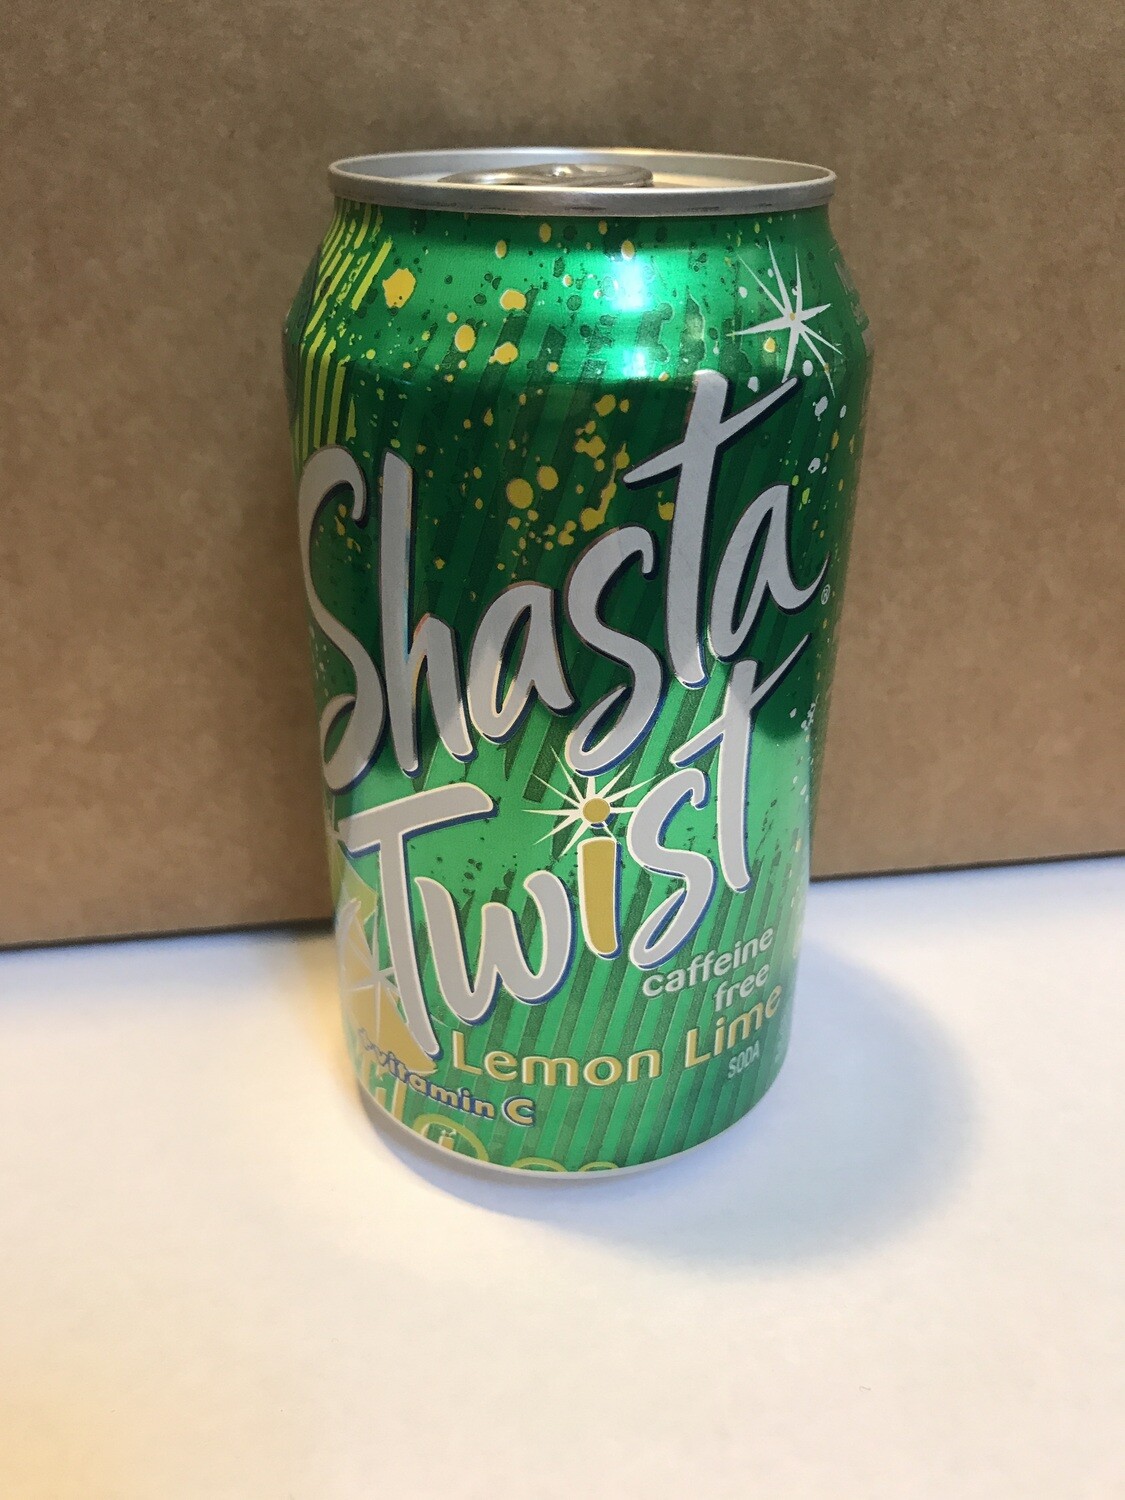 Beverage / Soda / Shasta Twist, 12 oz